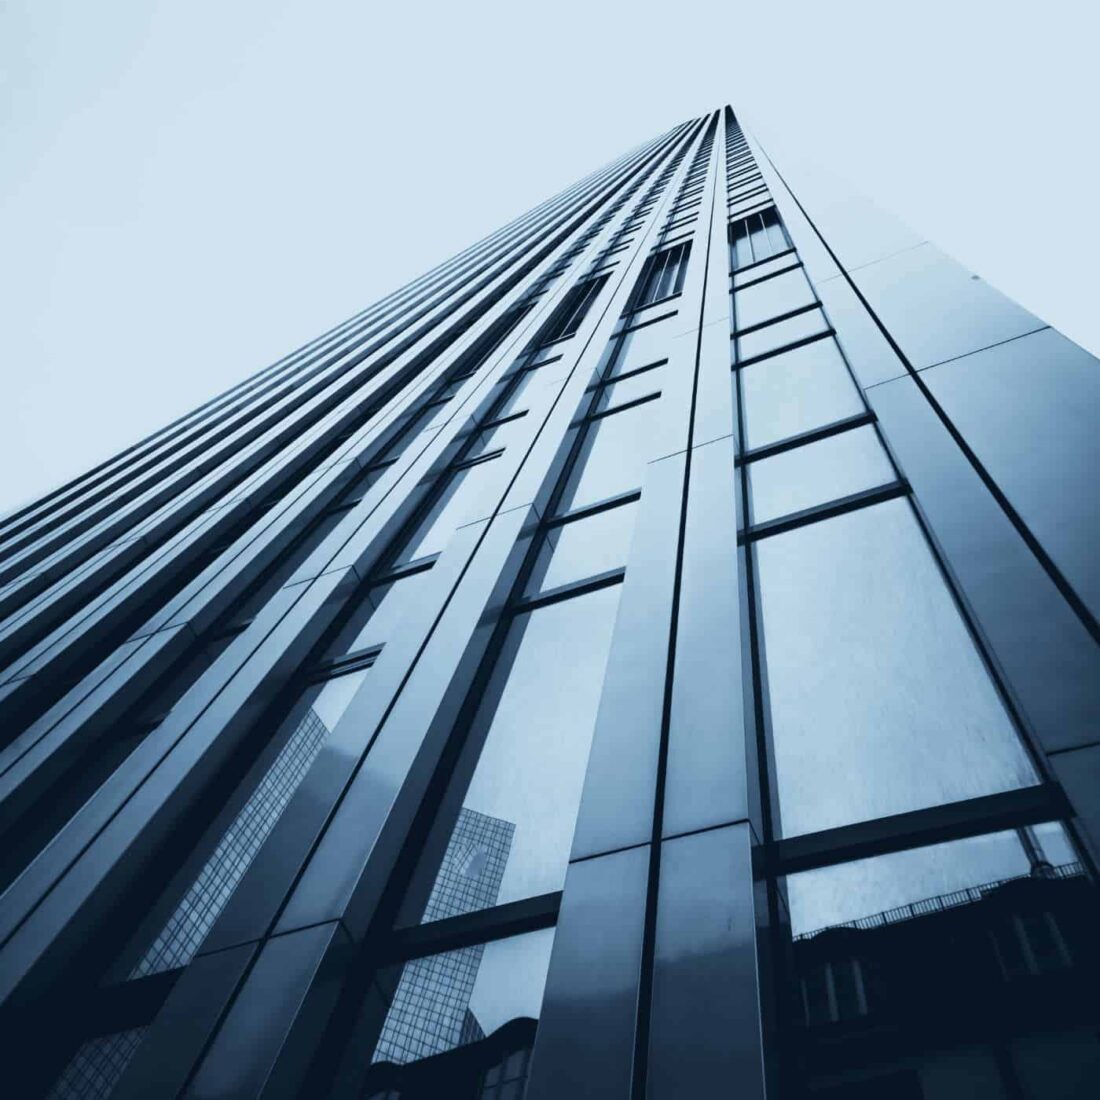 office-buildings-modern-glass-silhouettes-on-moder-PKCE77U.jpg